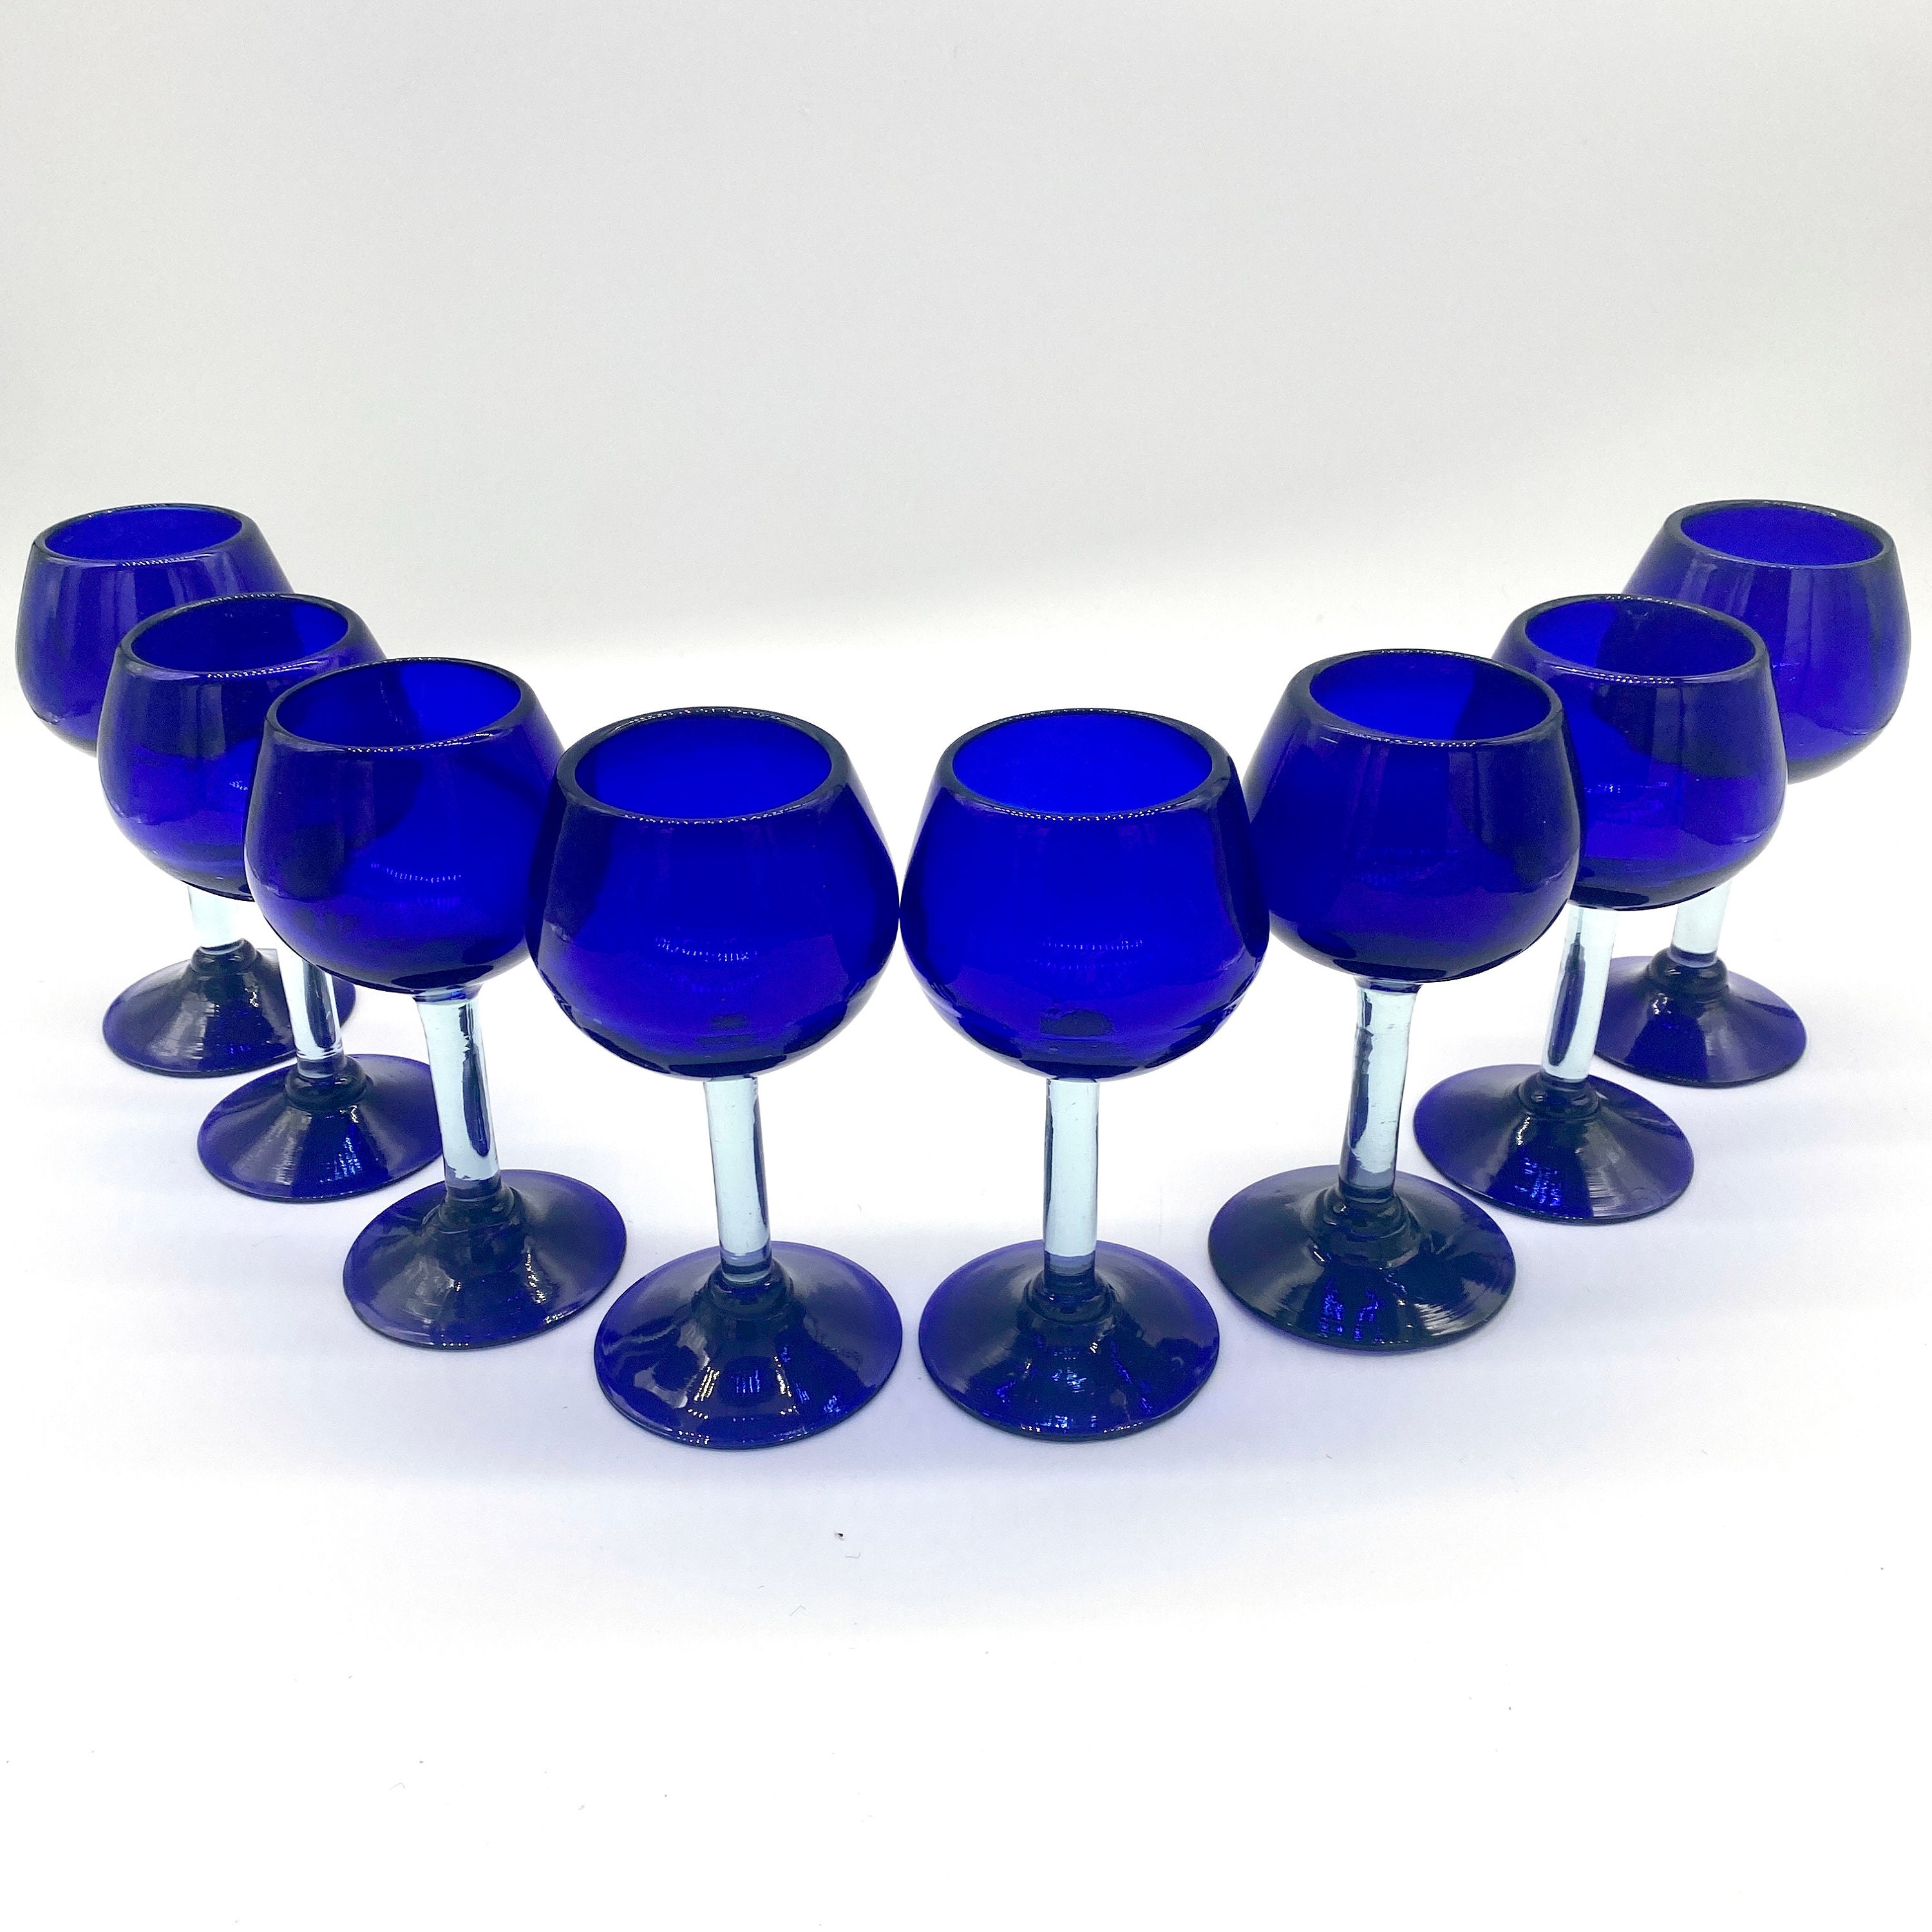 Stunning 7 Tall Blown Glass Goblets Set of 4 Cobalt and Aqua Blue Wine  Glasses Handblown Glass Bubble Stemware Unique Wine Glass 